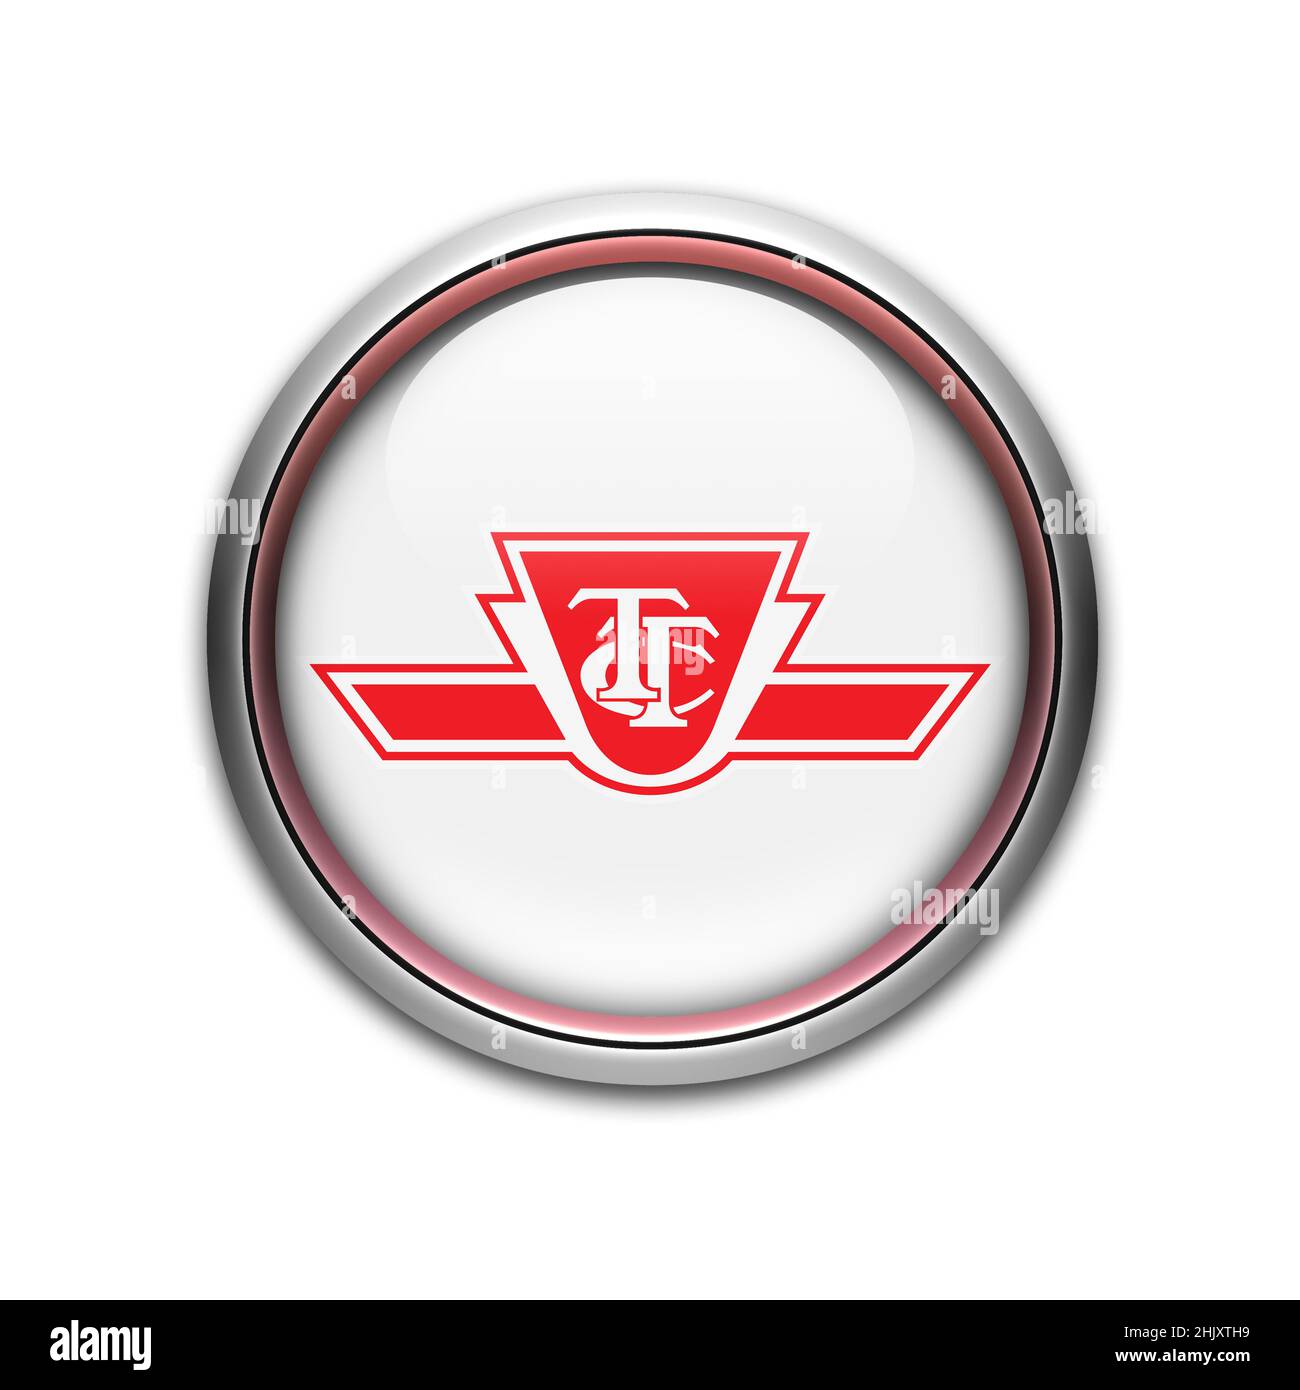 Toronto transit commission logo Stock Photo - Alamy